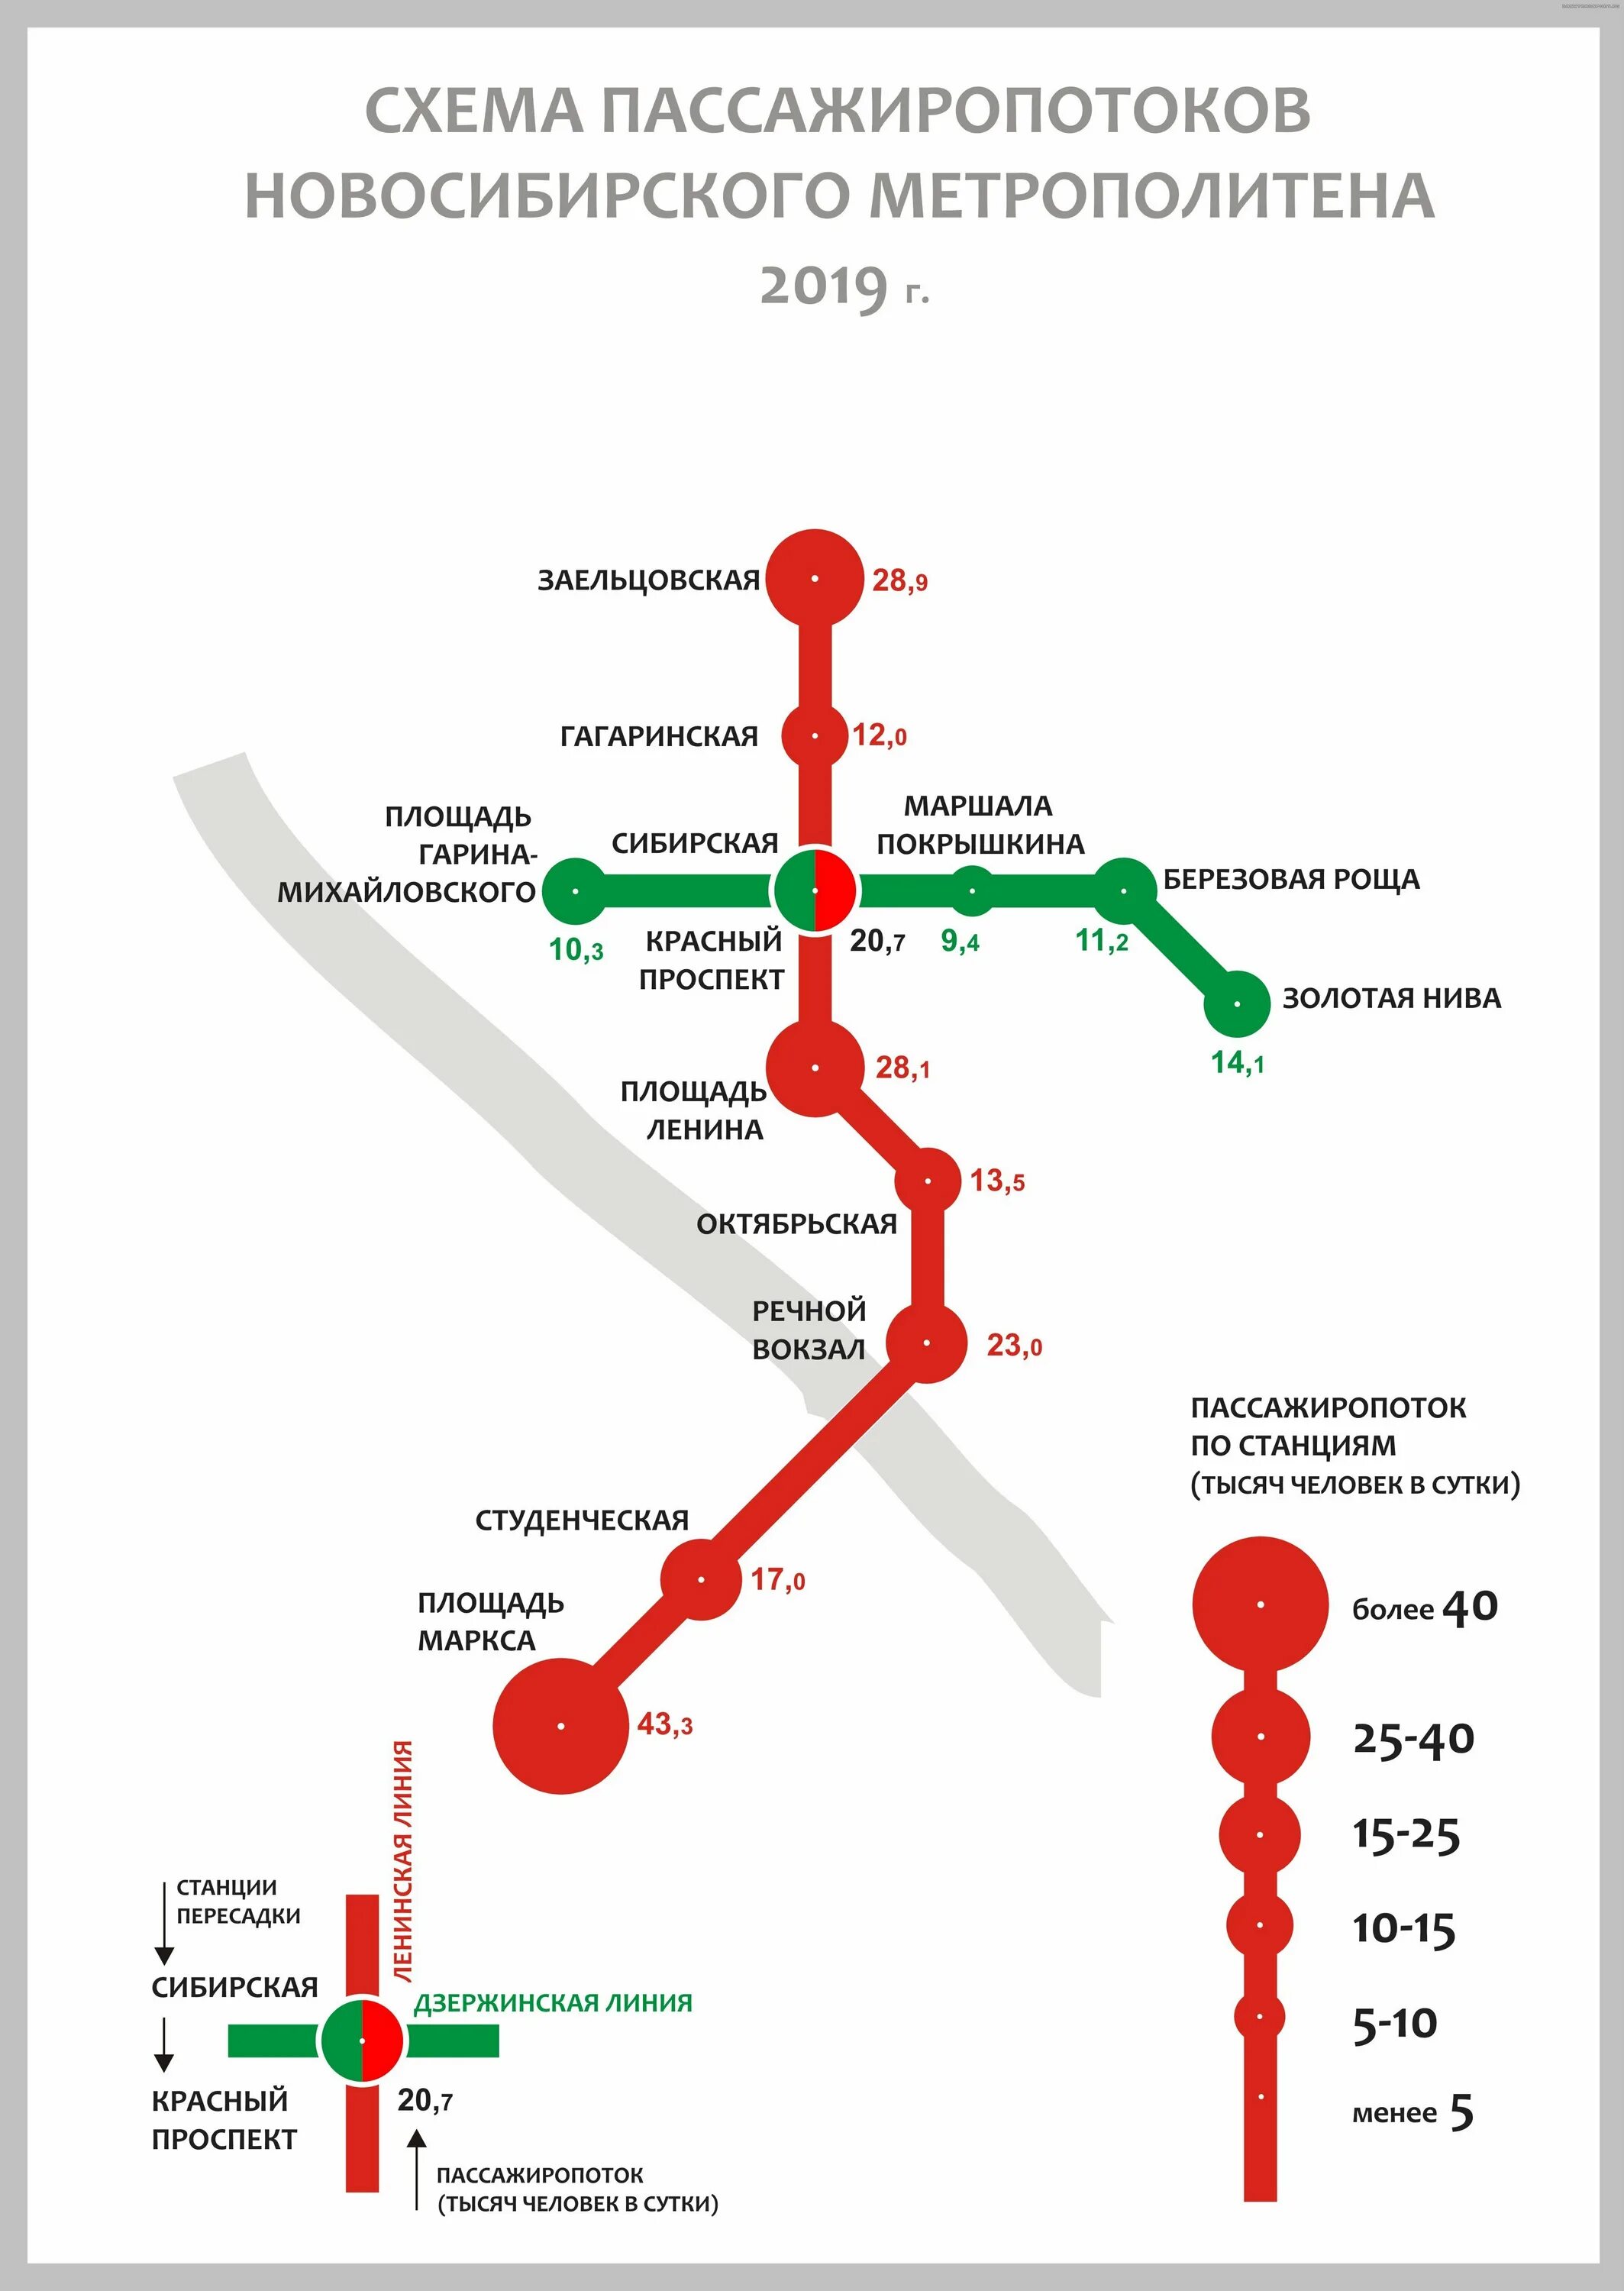 Новосибирск список маршрутов. Схема метро Новосибирска 2020. Метро Новосибирск схема линий. Метро Новосибирска схема 2019. Метрополитен Новосибирск схема 2020.